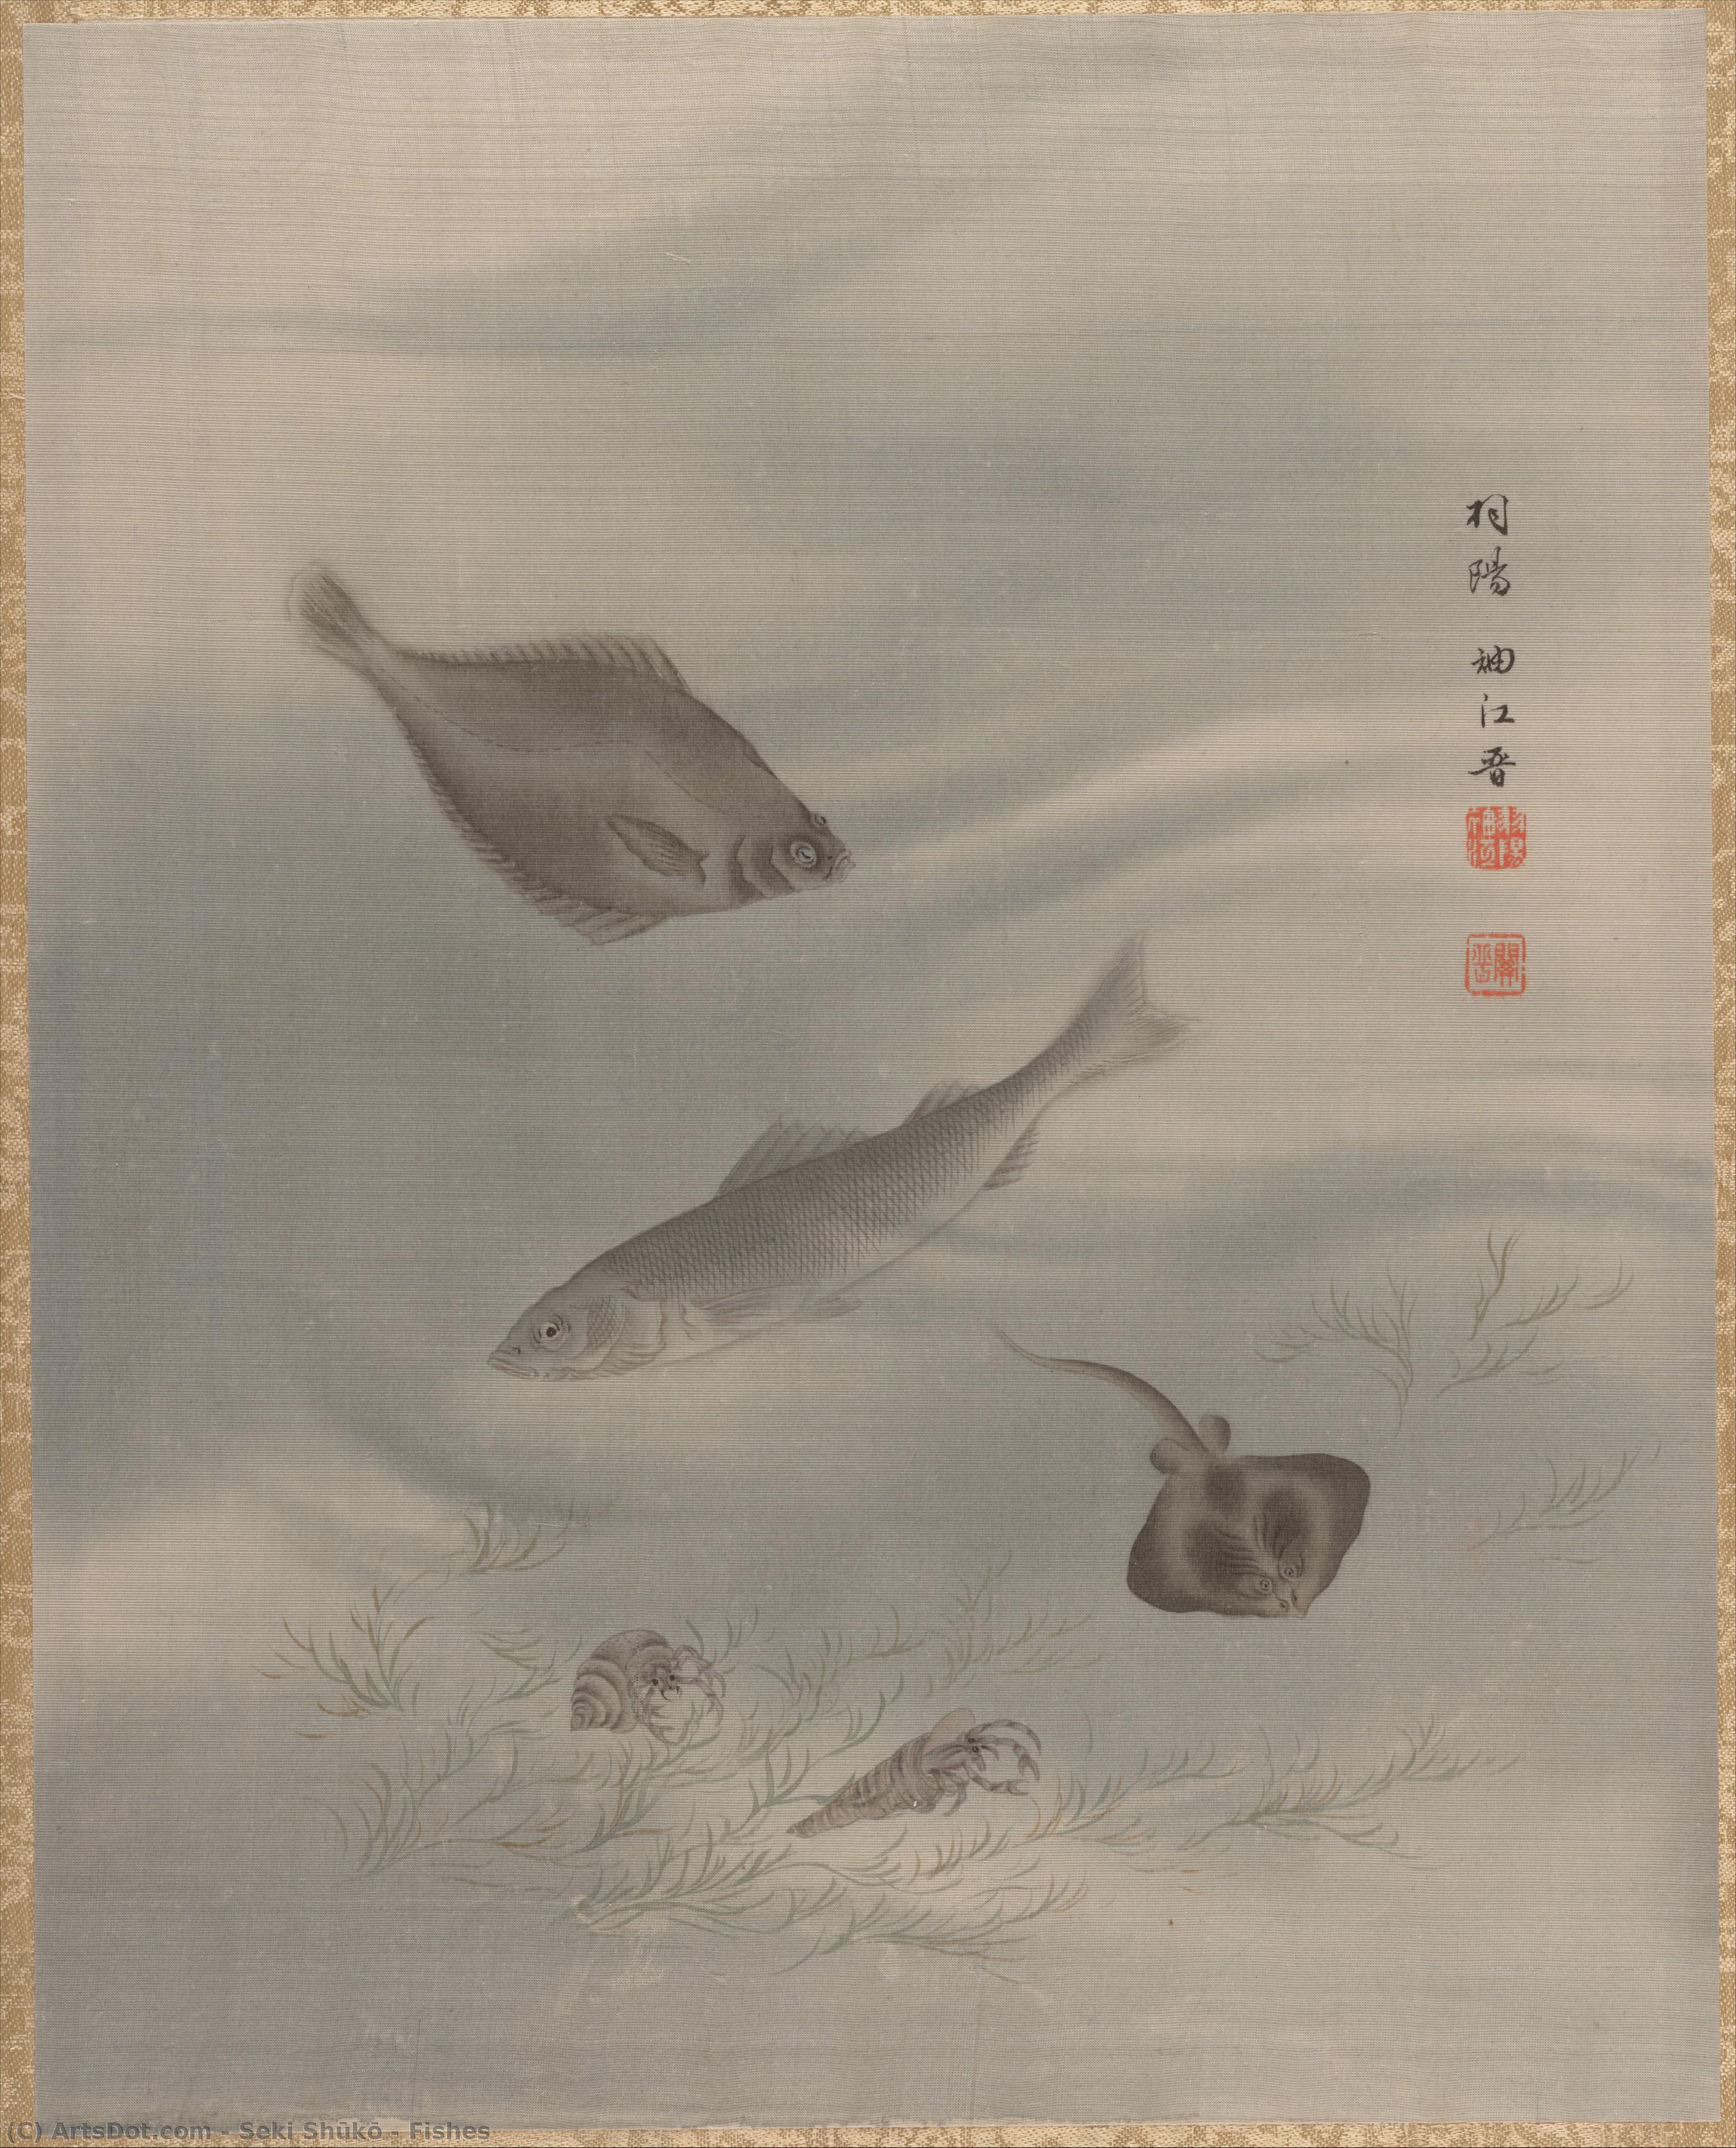  Artwork Replica Fishes, 1890 by Seki Shūkō (1858-1915) | ArtsDot.com